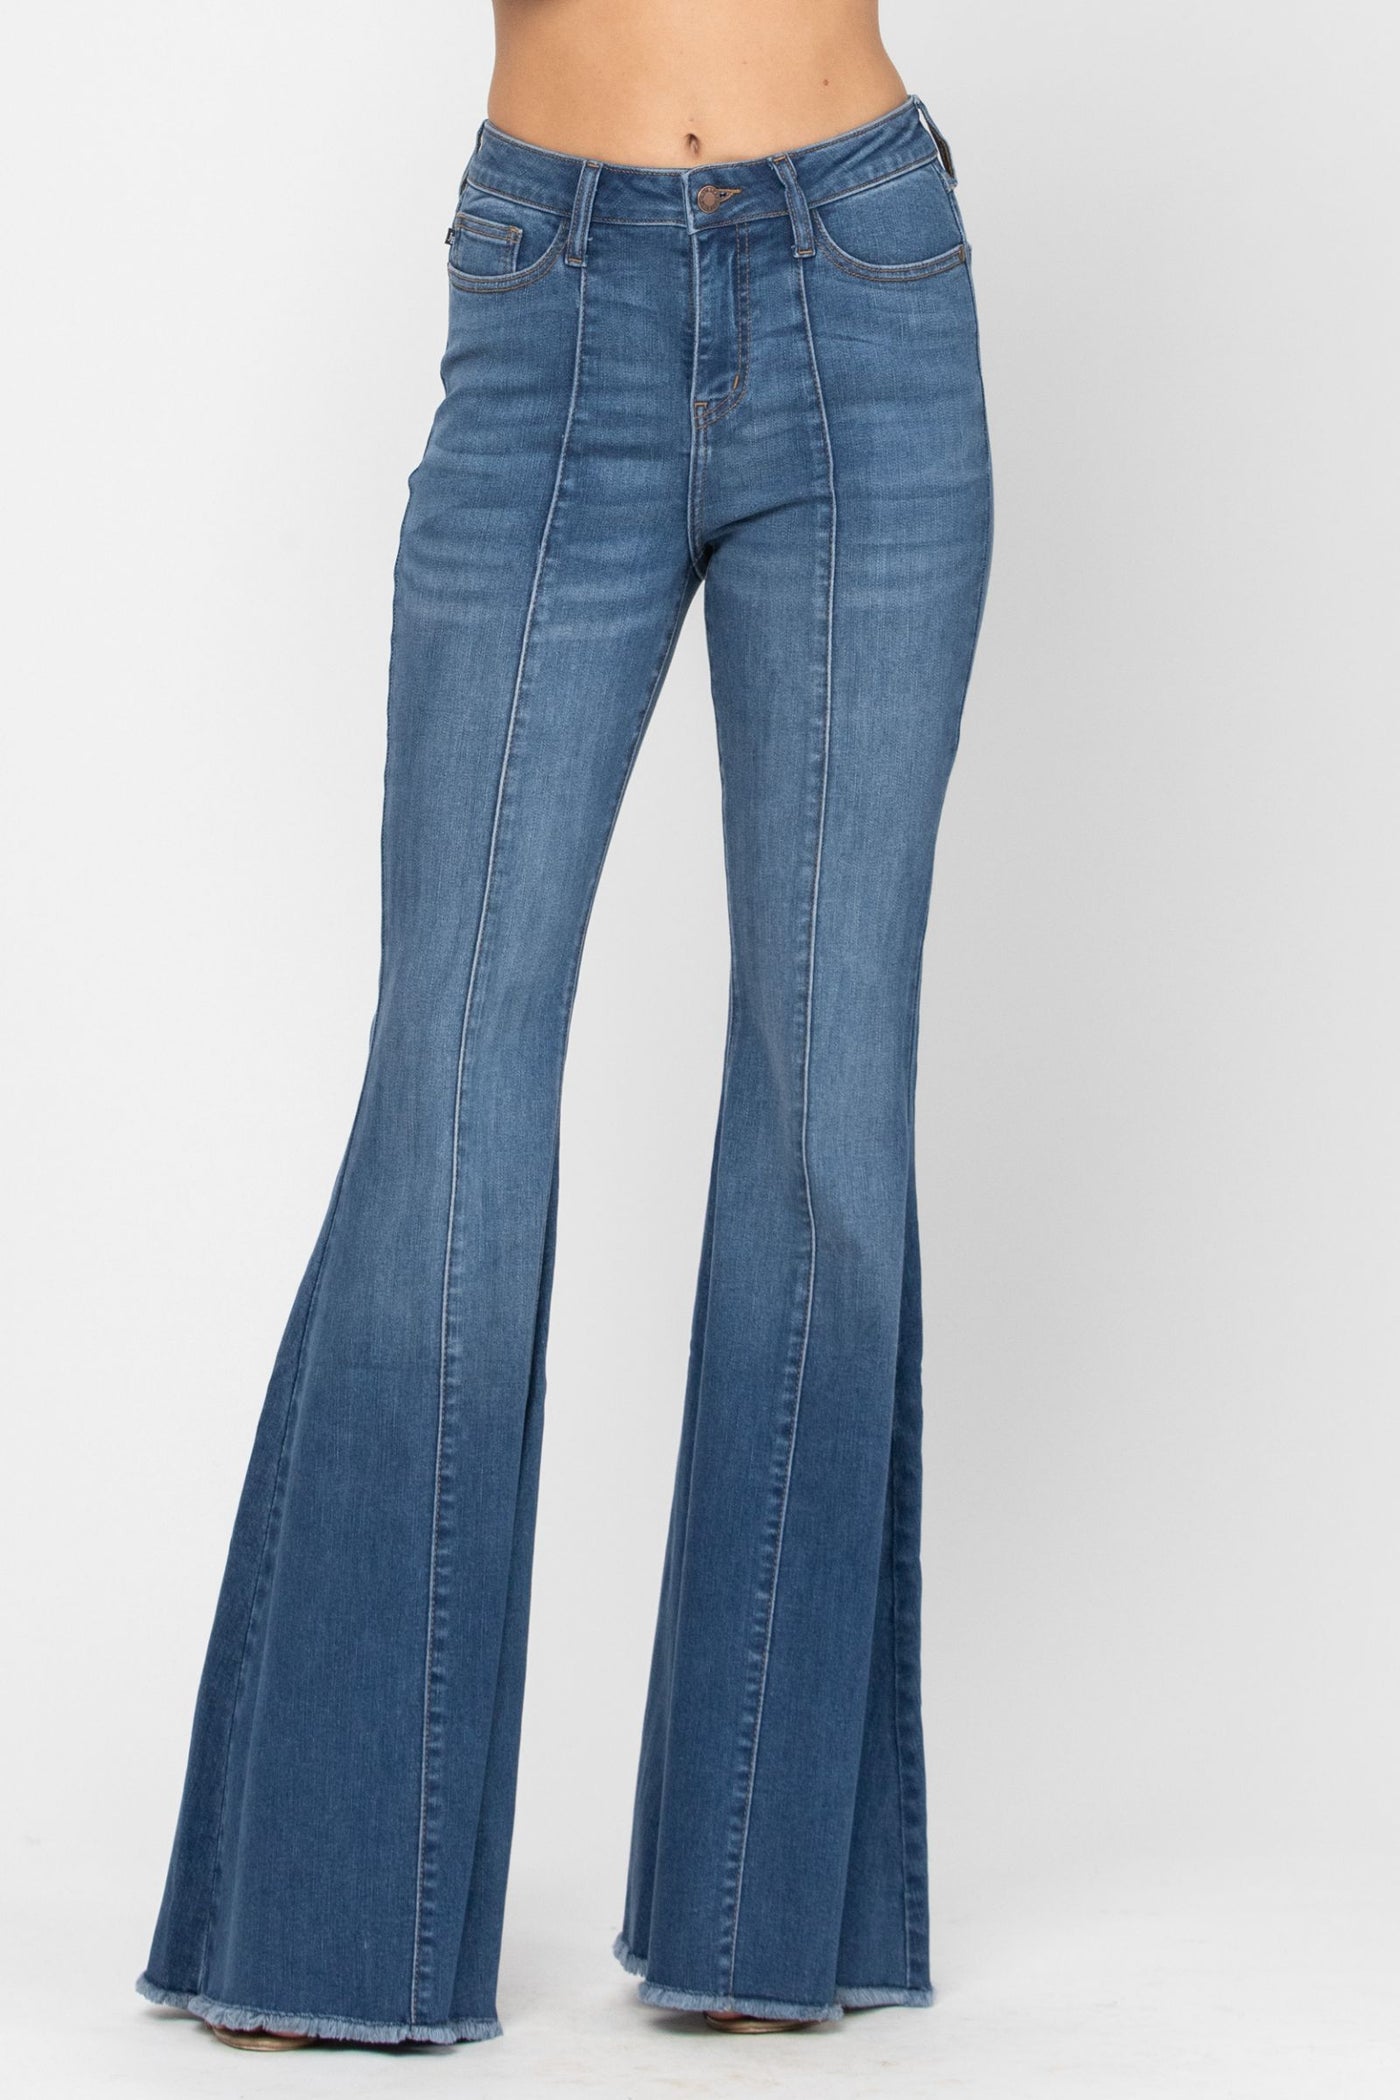 Judy Blue Jeans 88204